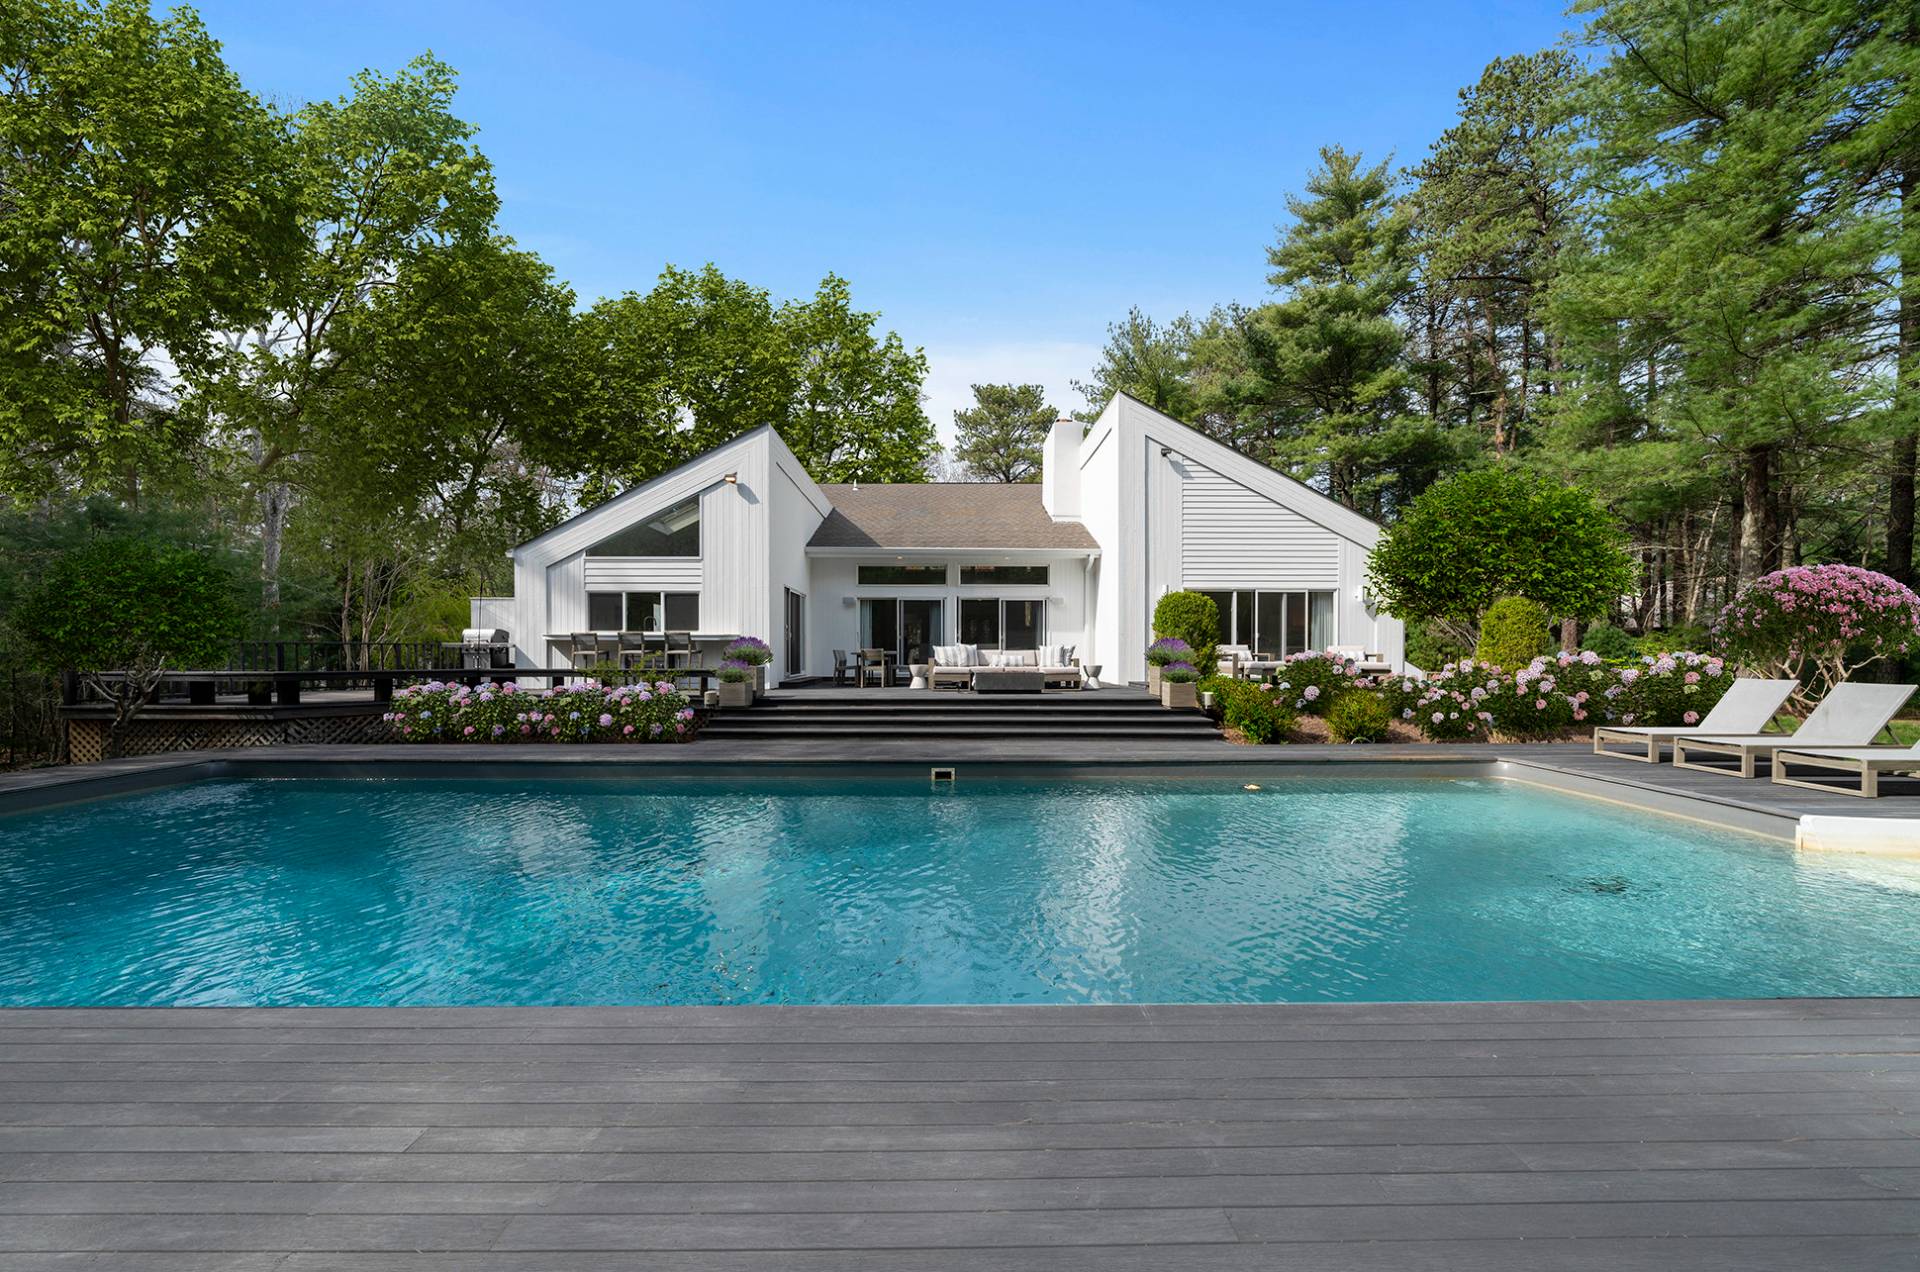 Rental Property at 6 Bull Path, East Hampton, Hamptons, NY - Bedrooms: 6 
Bathrooms: 4  - $65,000 MO.